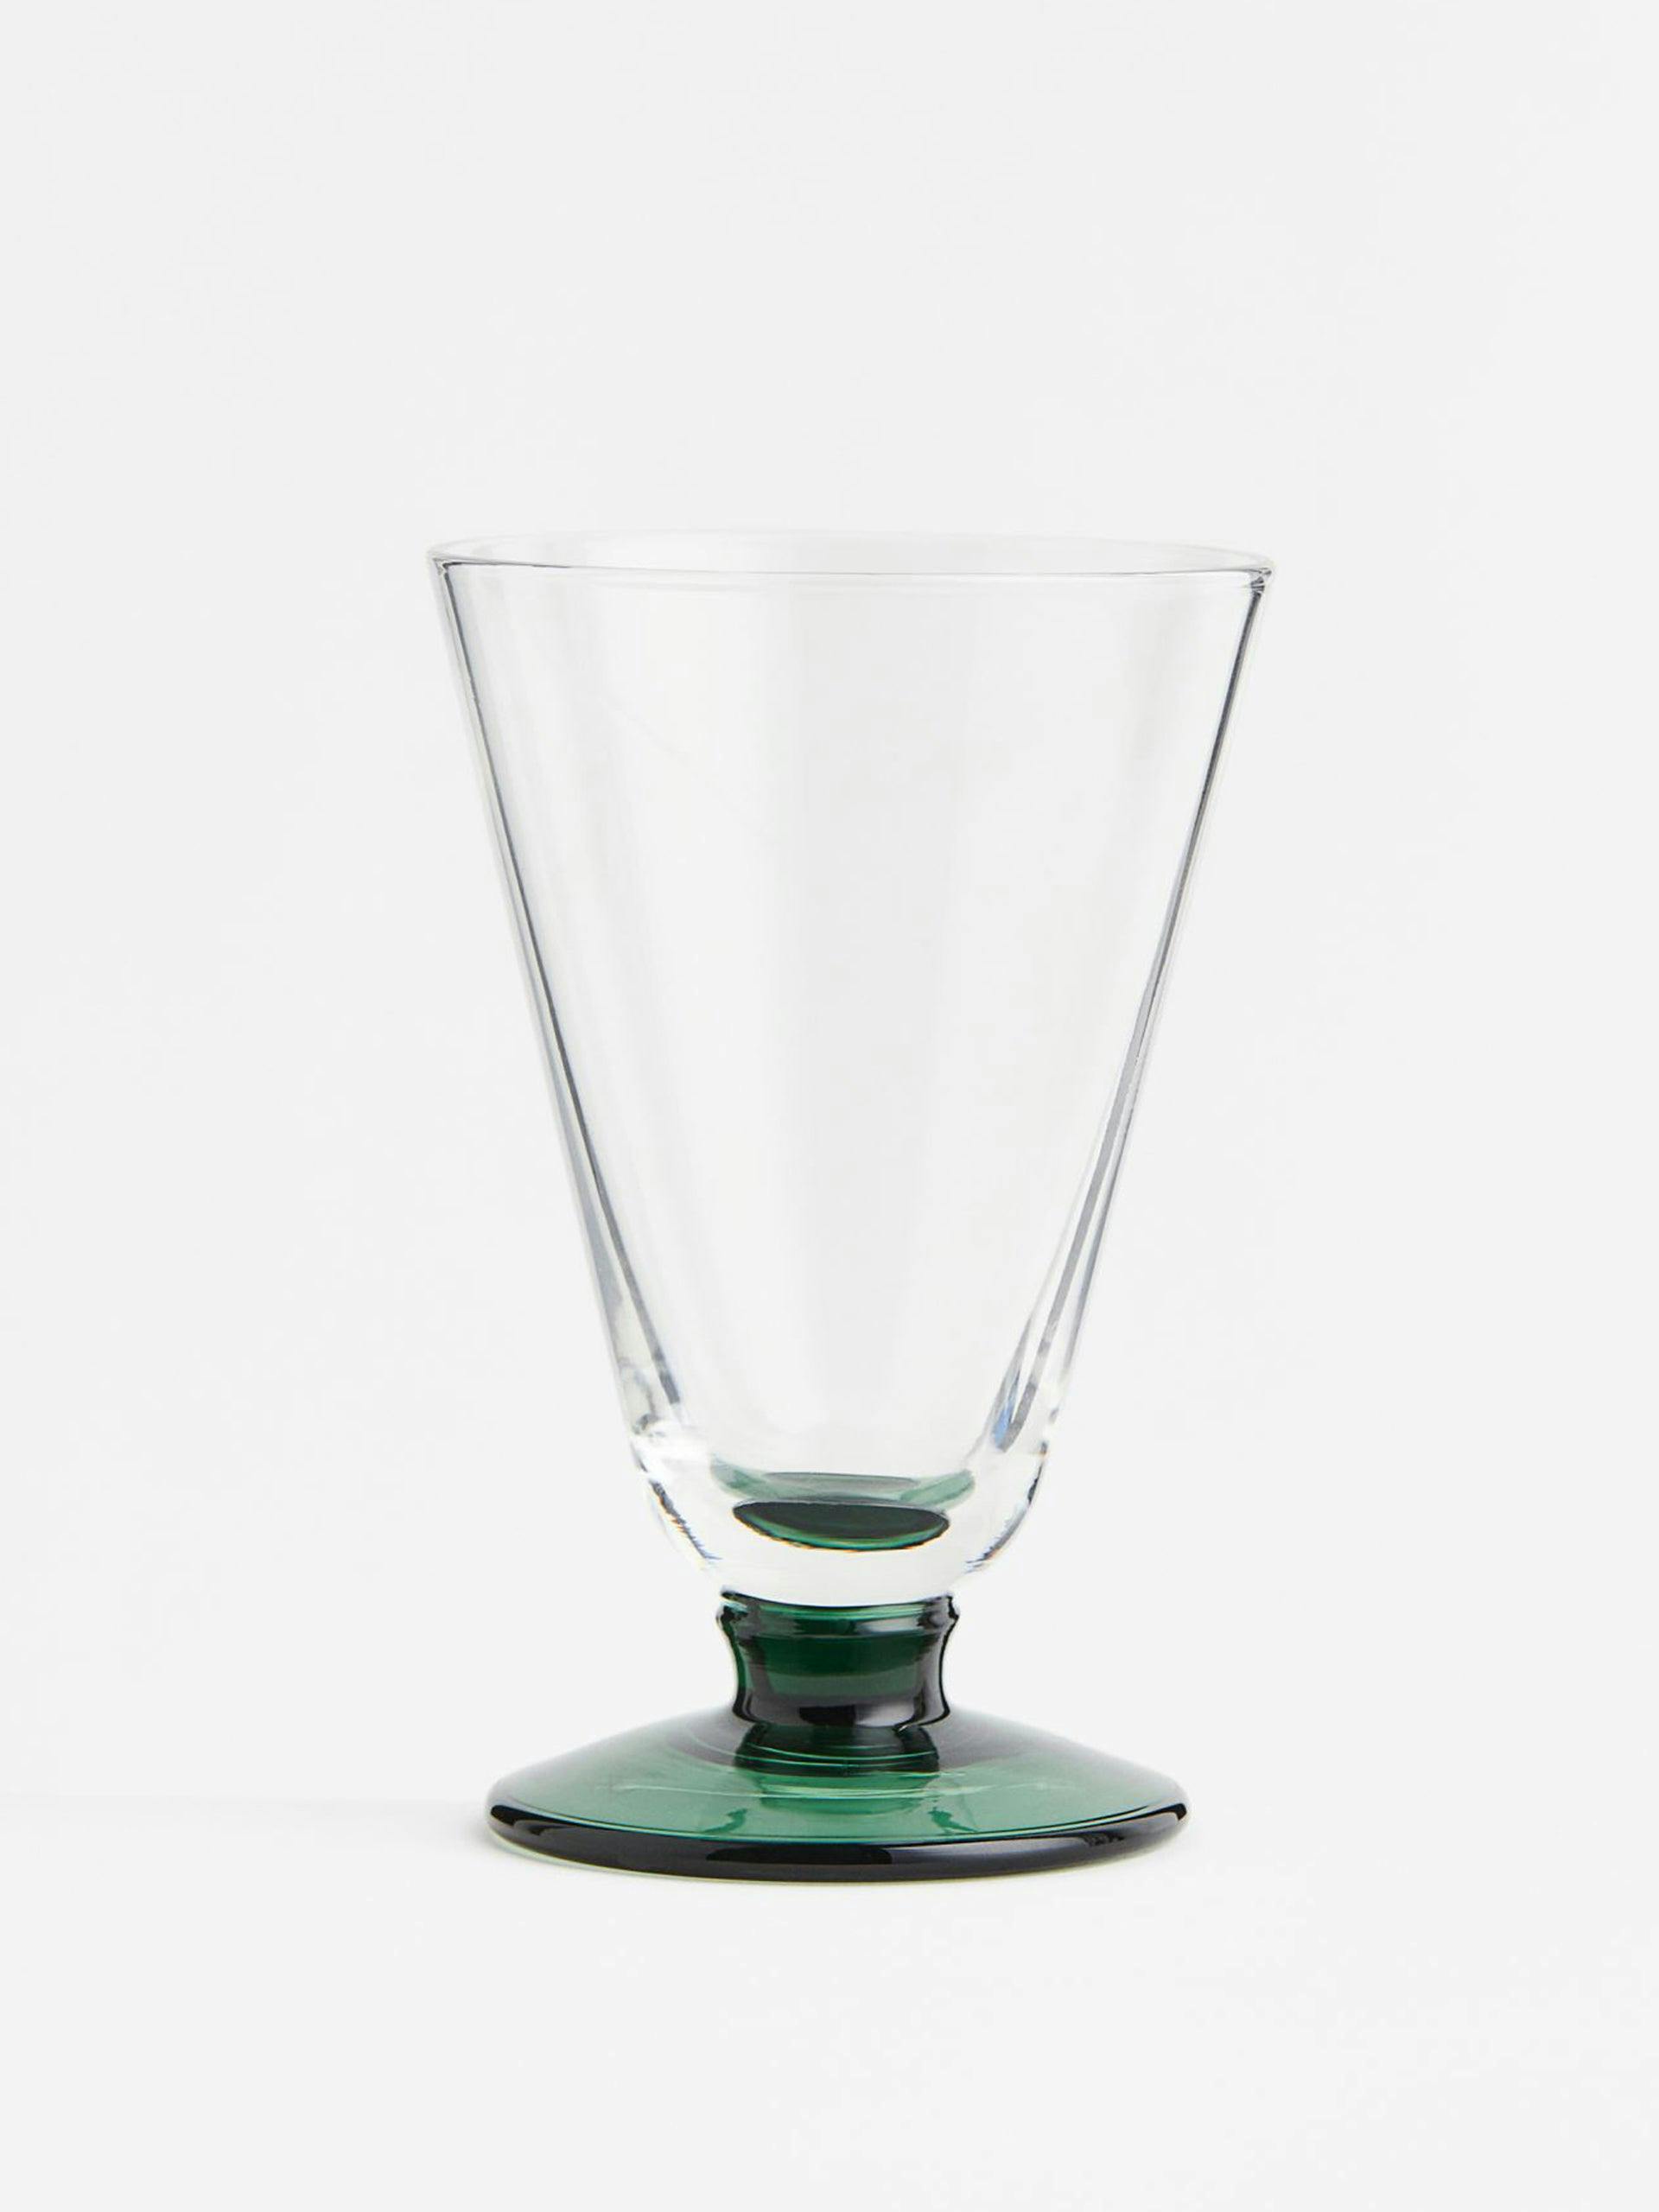 Glass on a green stem